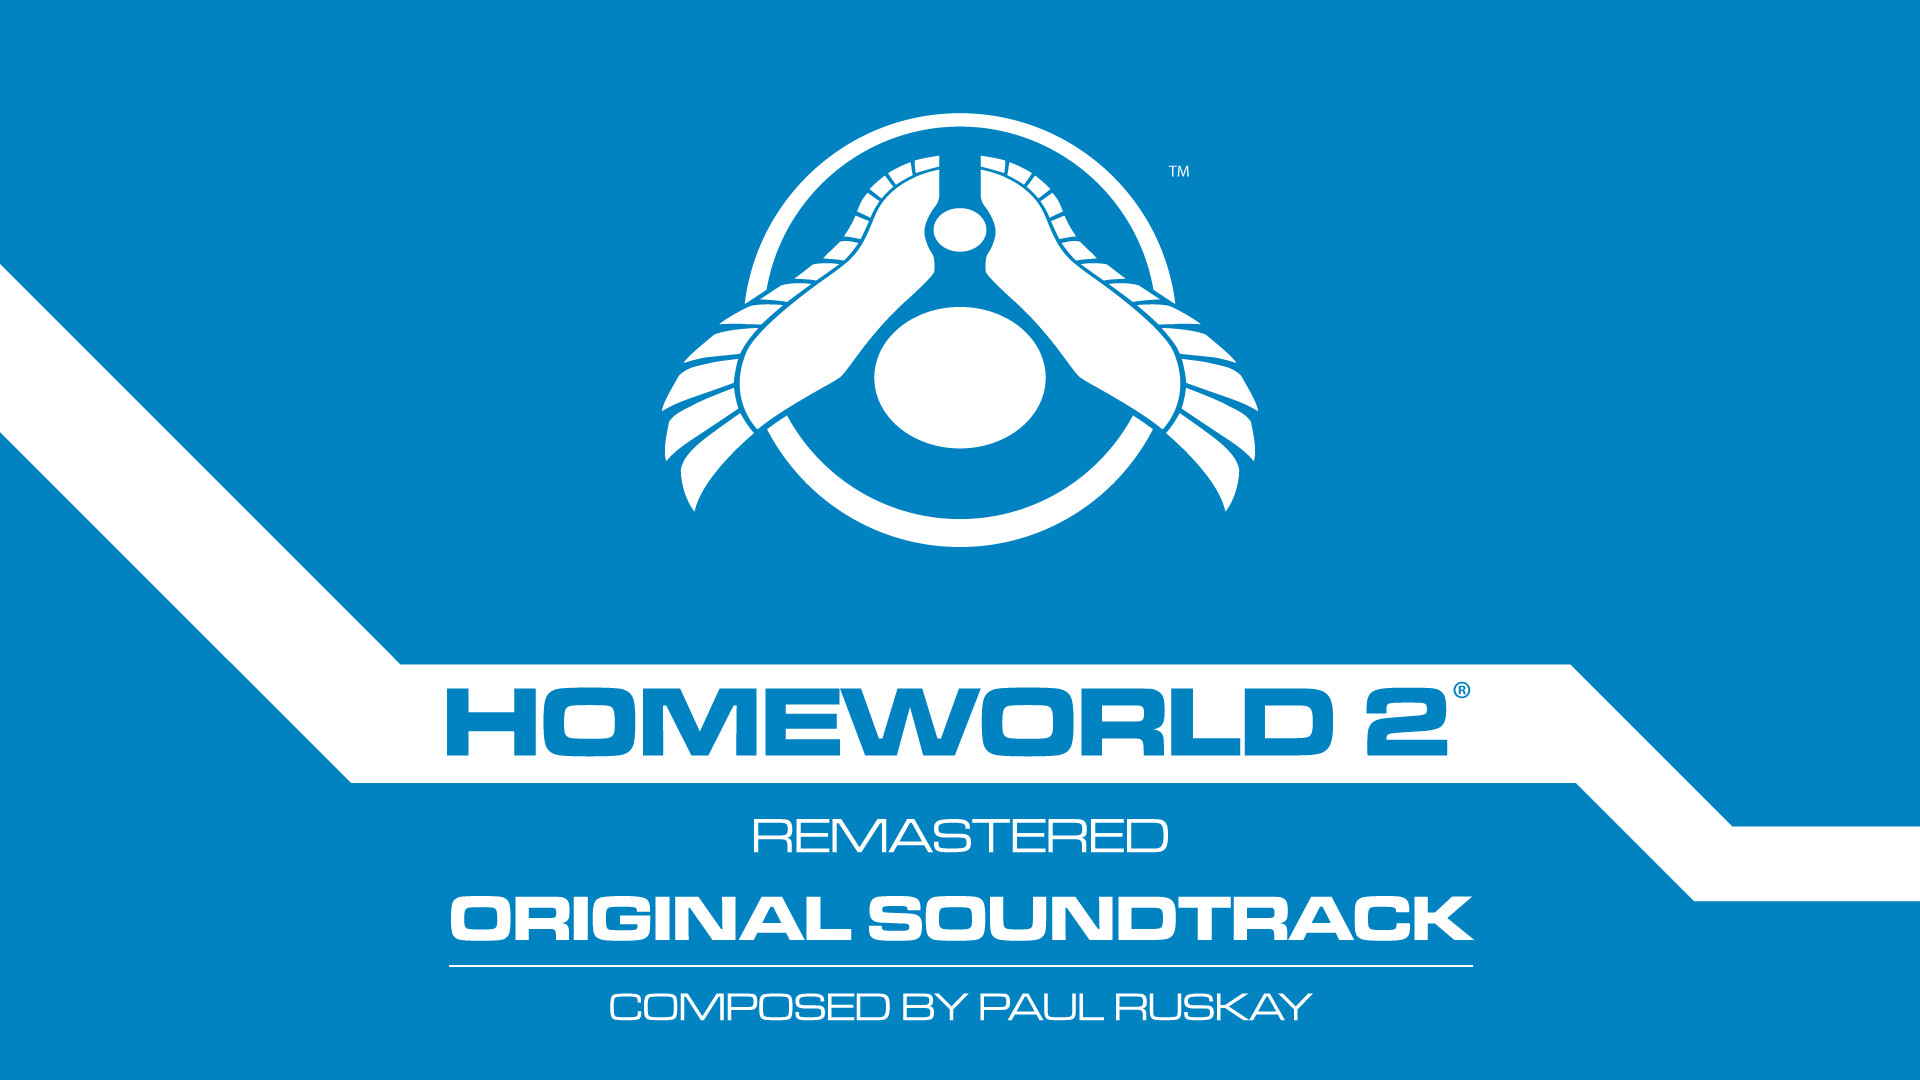 Homeworld 2 Remastered Soundtrack Featured Screenshot #1